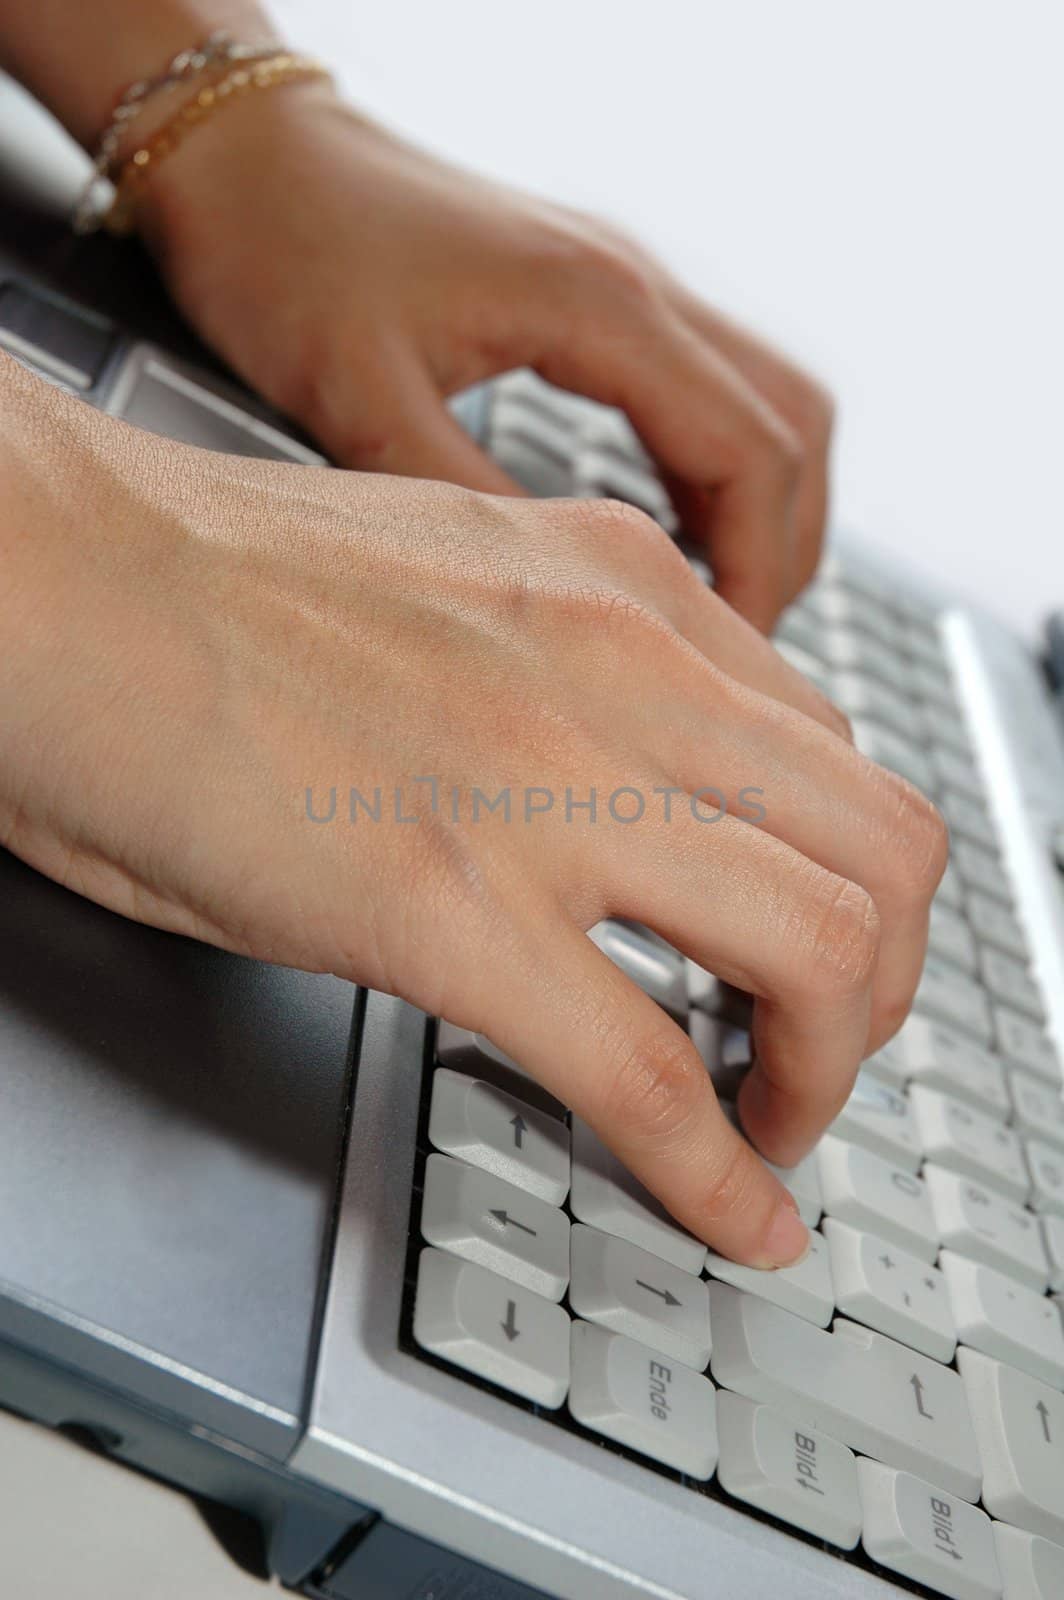 Fingers typing laptop / keyboard / notebook